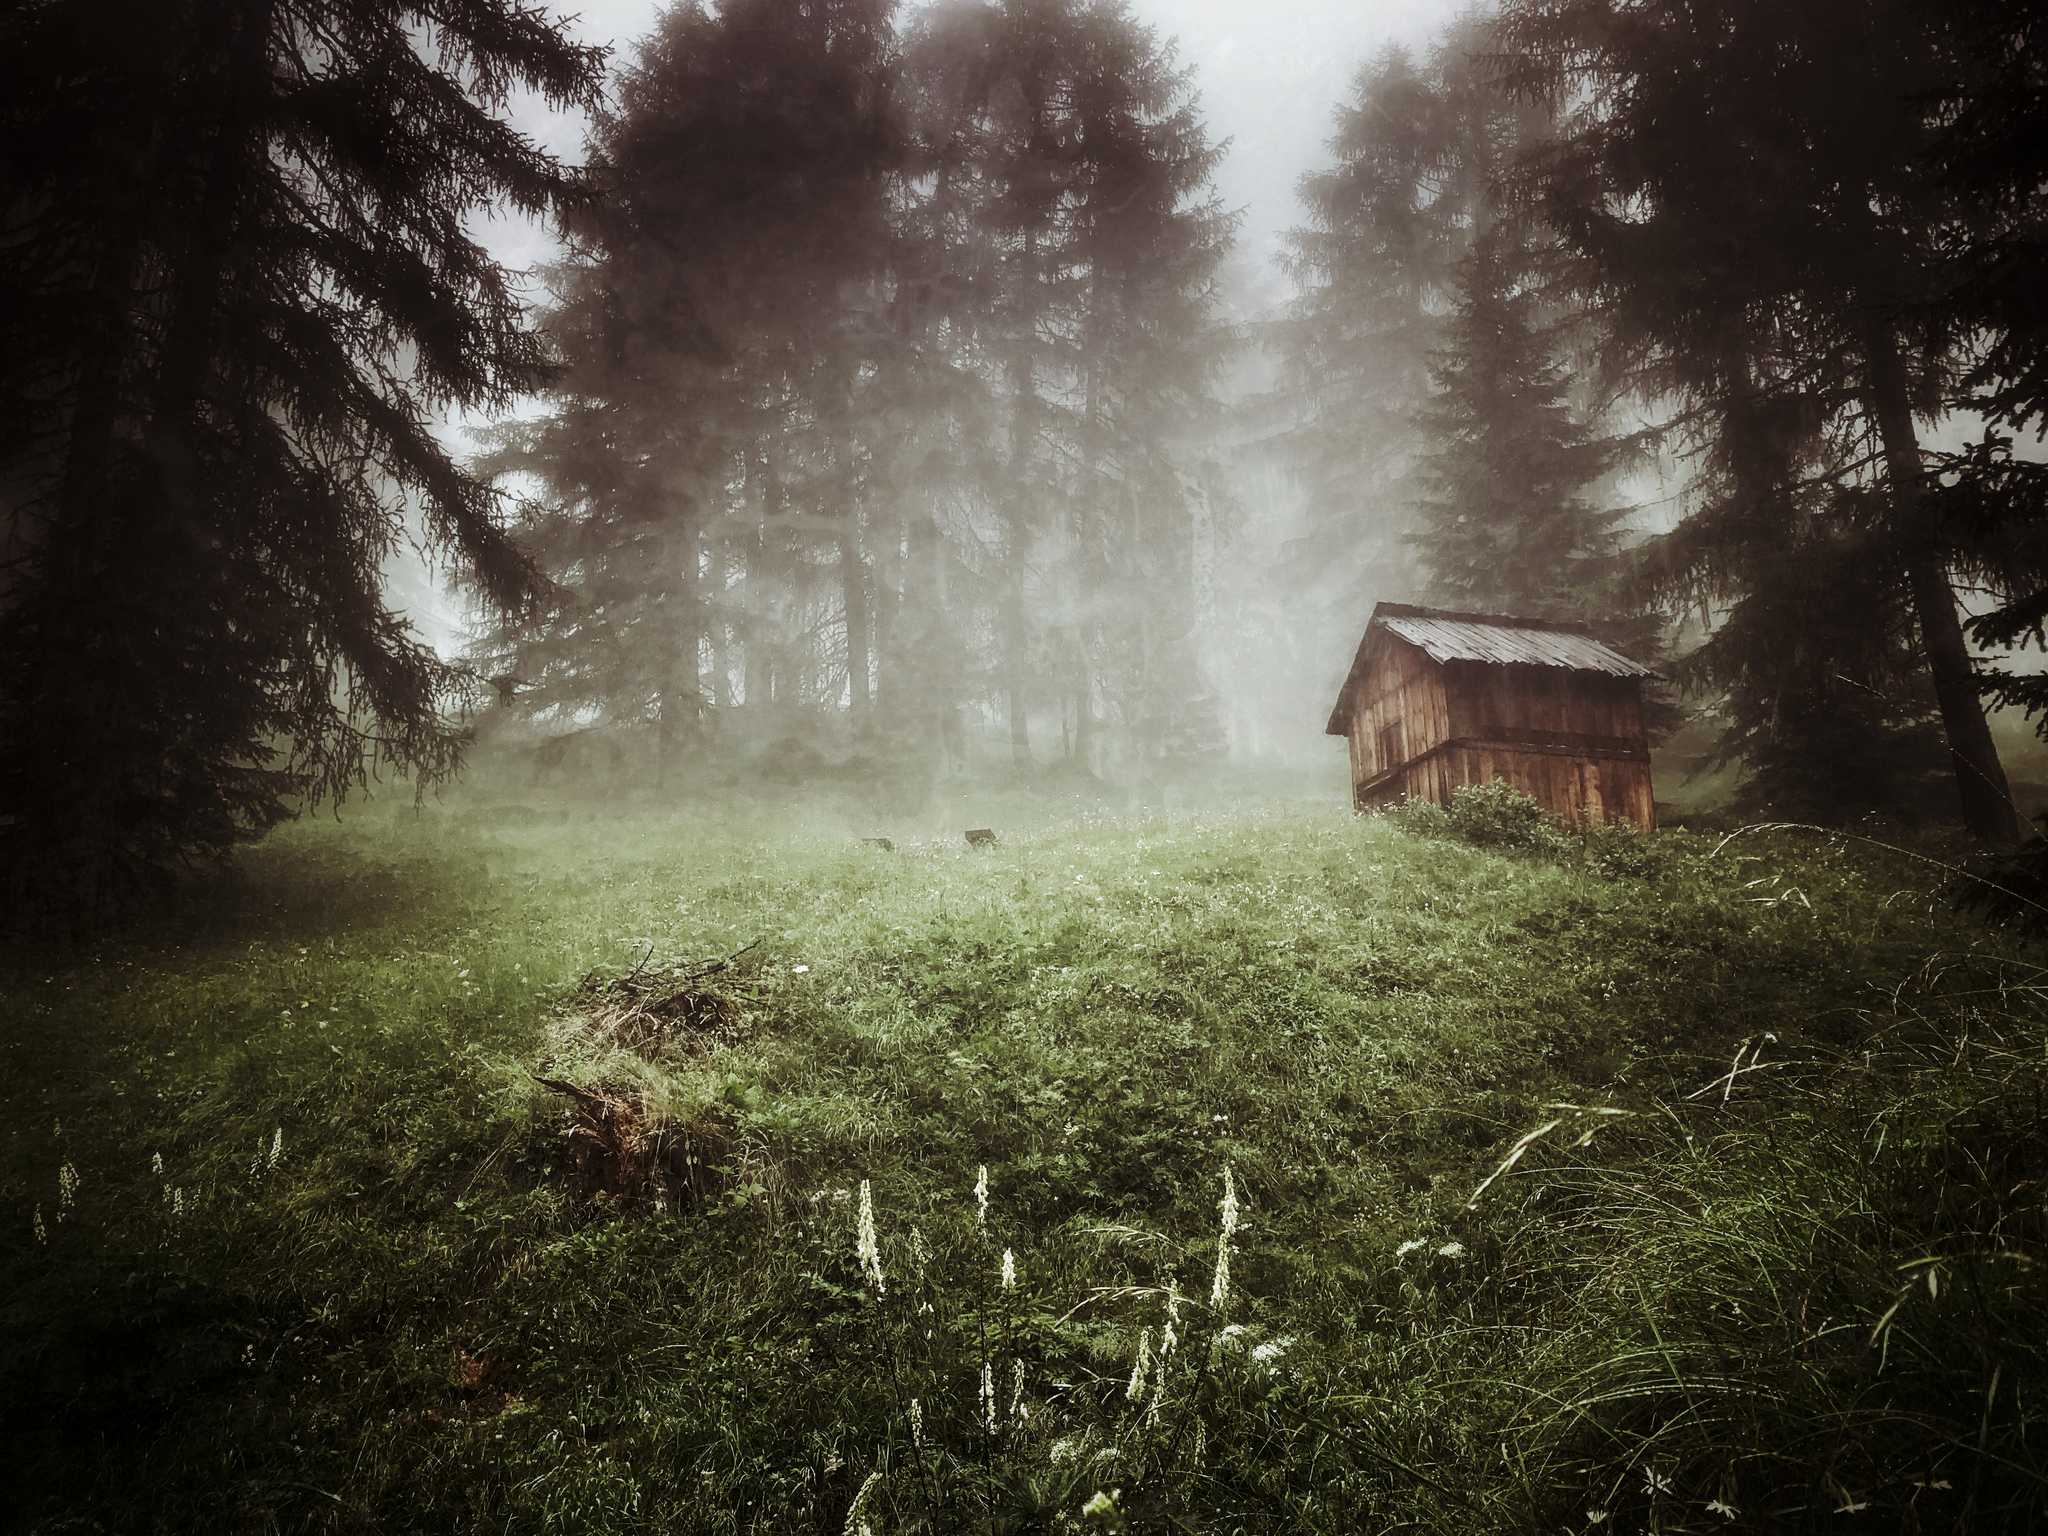 Hut in mist, Corvara, South Tyrol, Italy